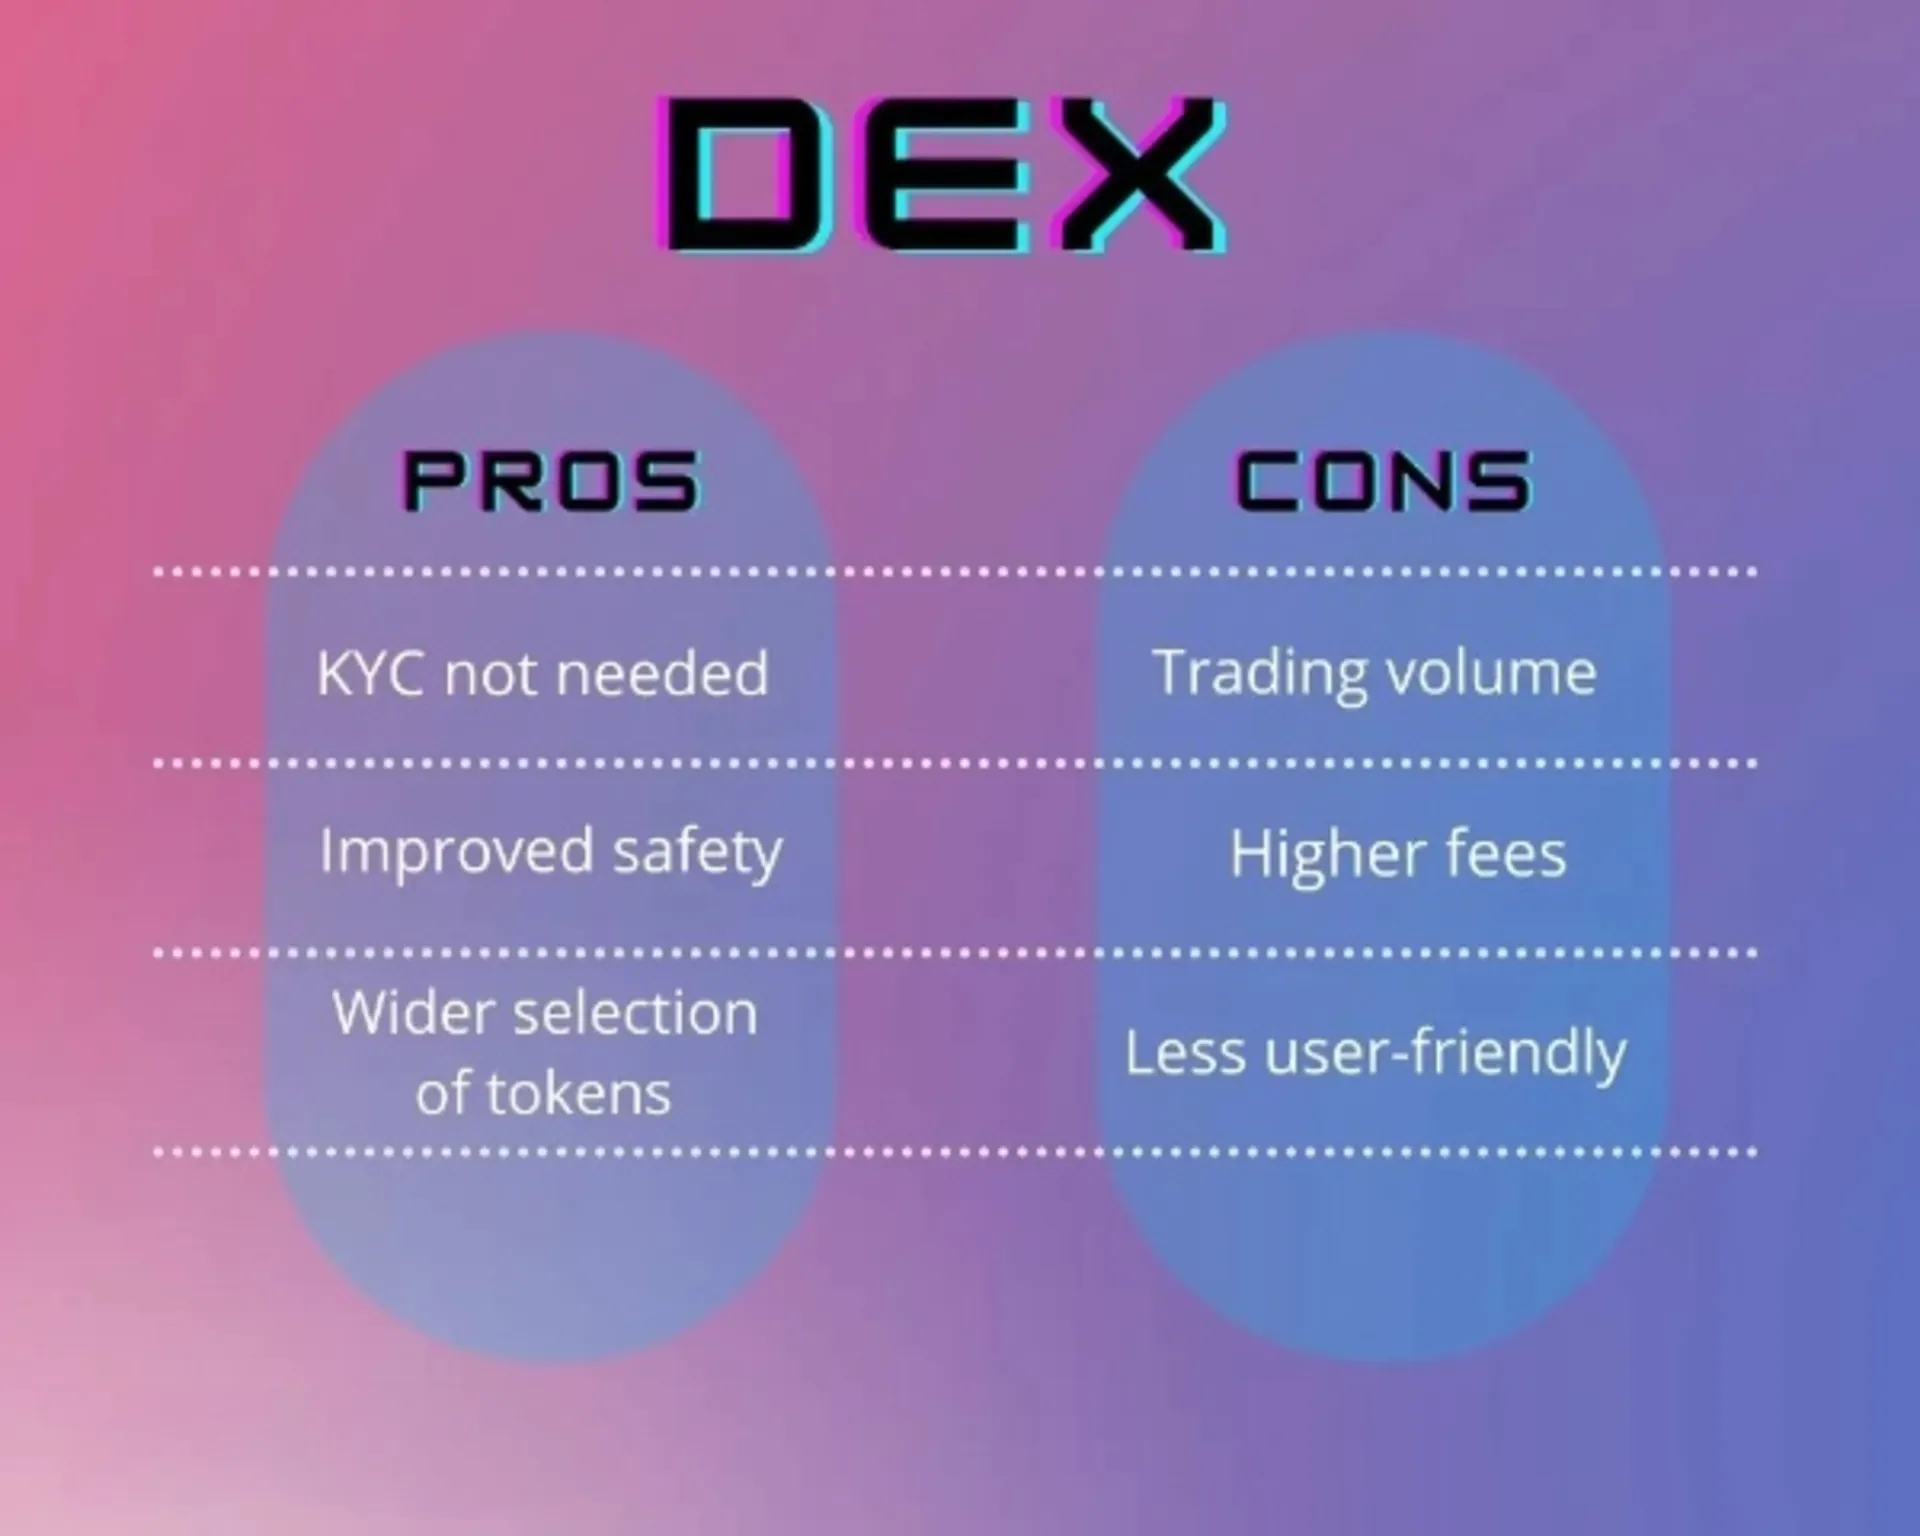 Advantages And Disadvantages Of Dexs